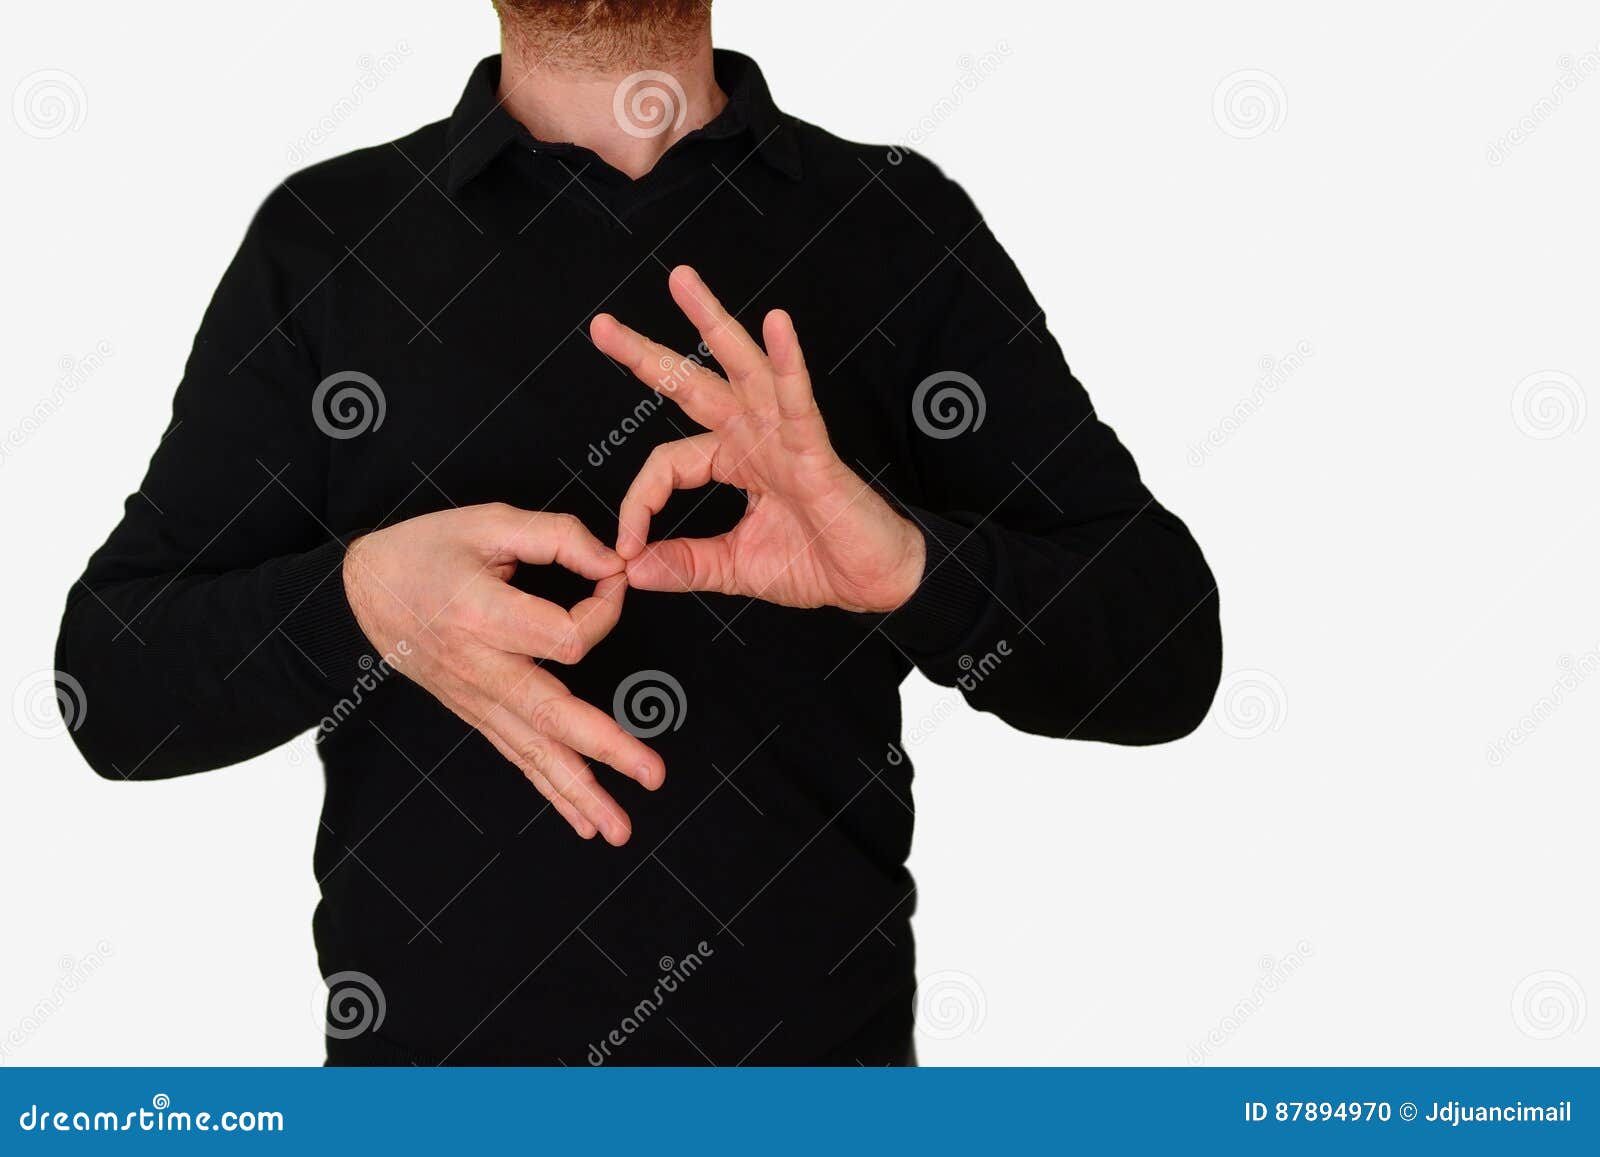 sign language interpreter man translating a meeting to asl, american sign language. empty copy space